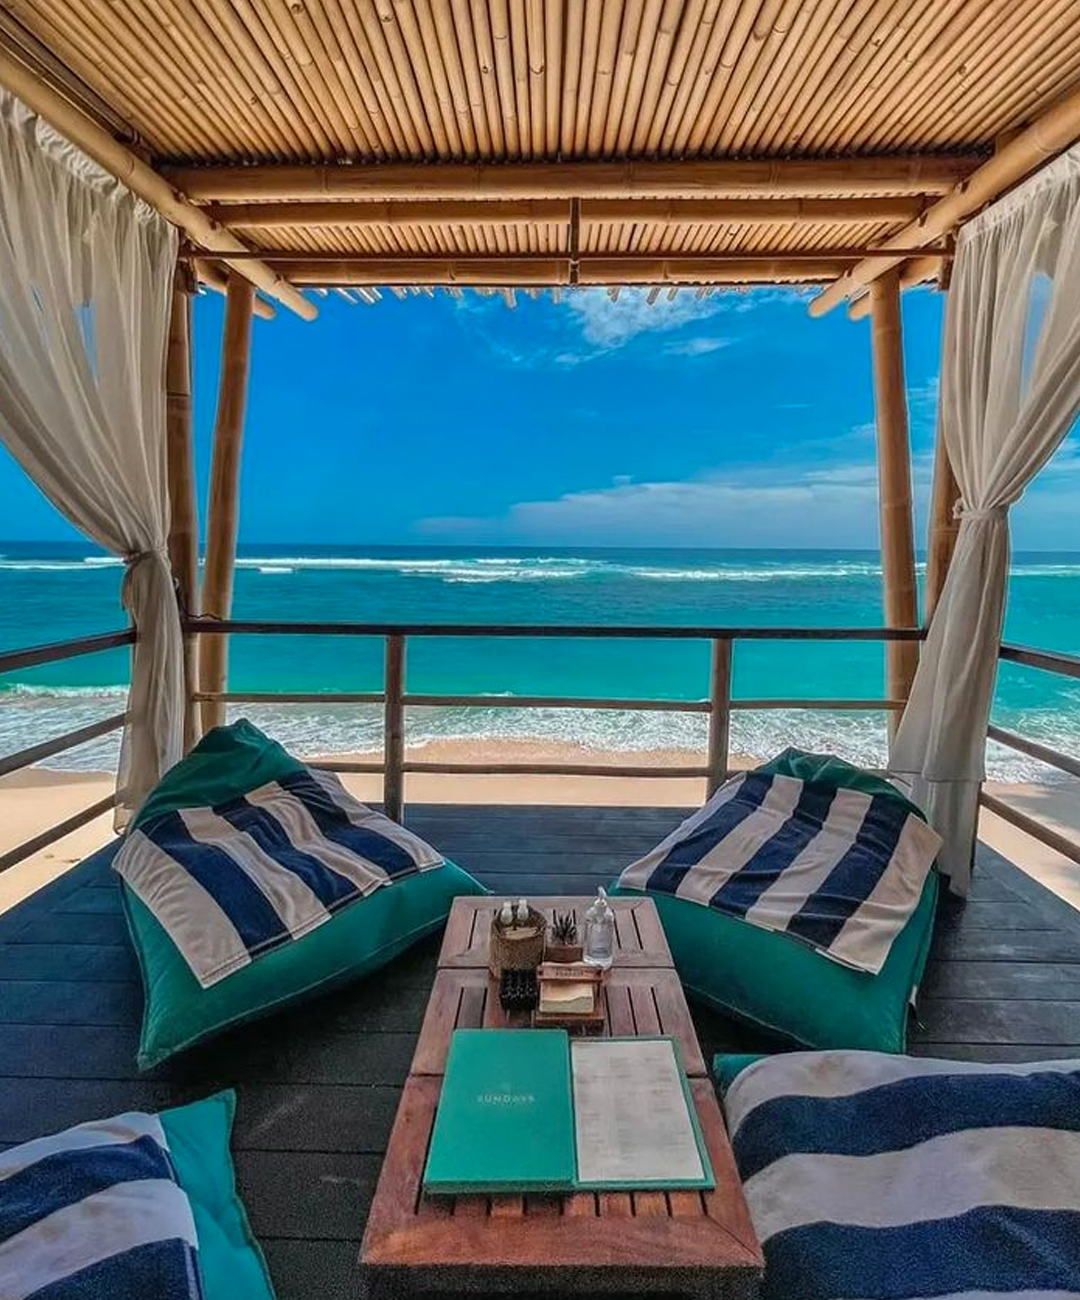 a cabana overlooking the ocean